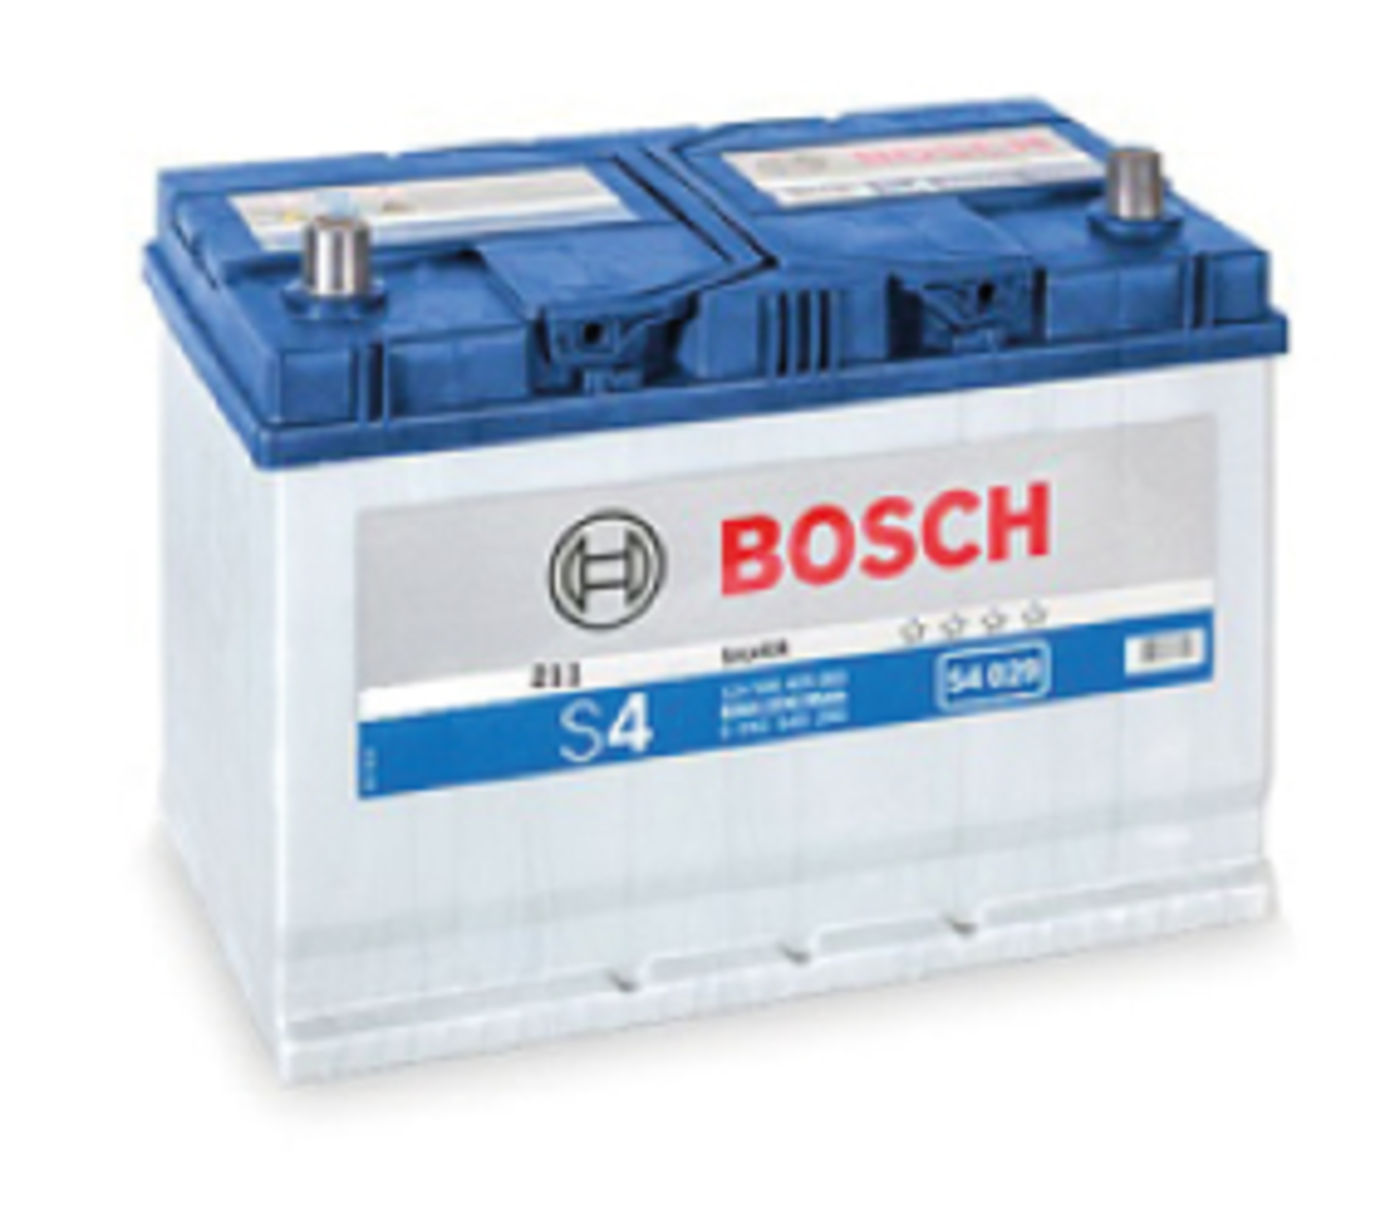 Bosch 30H HD